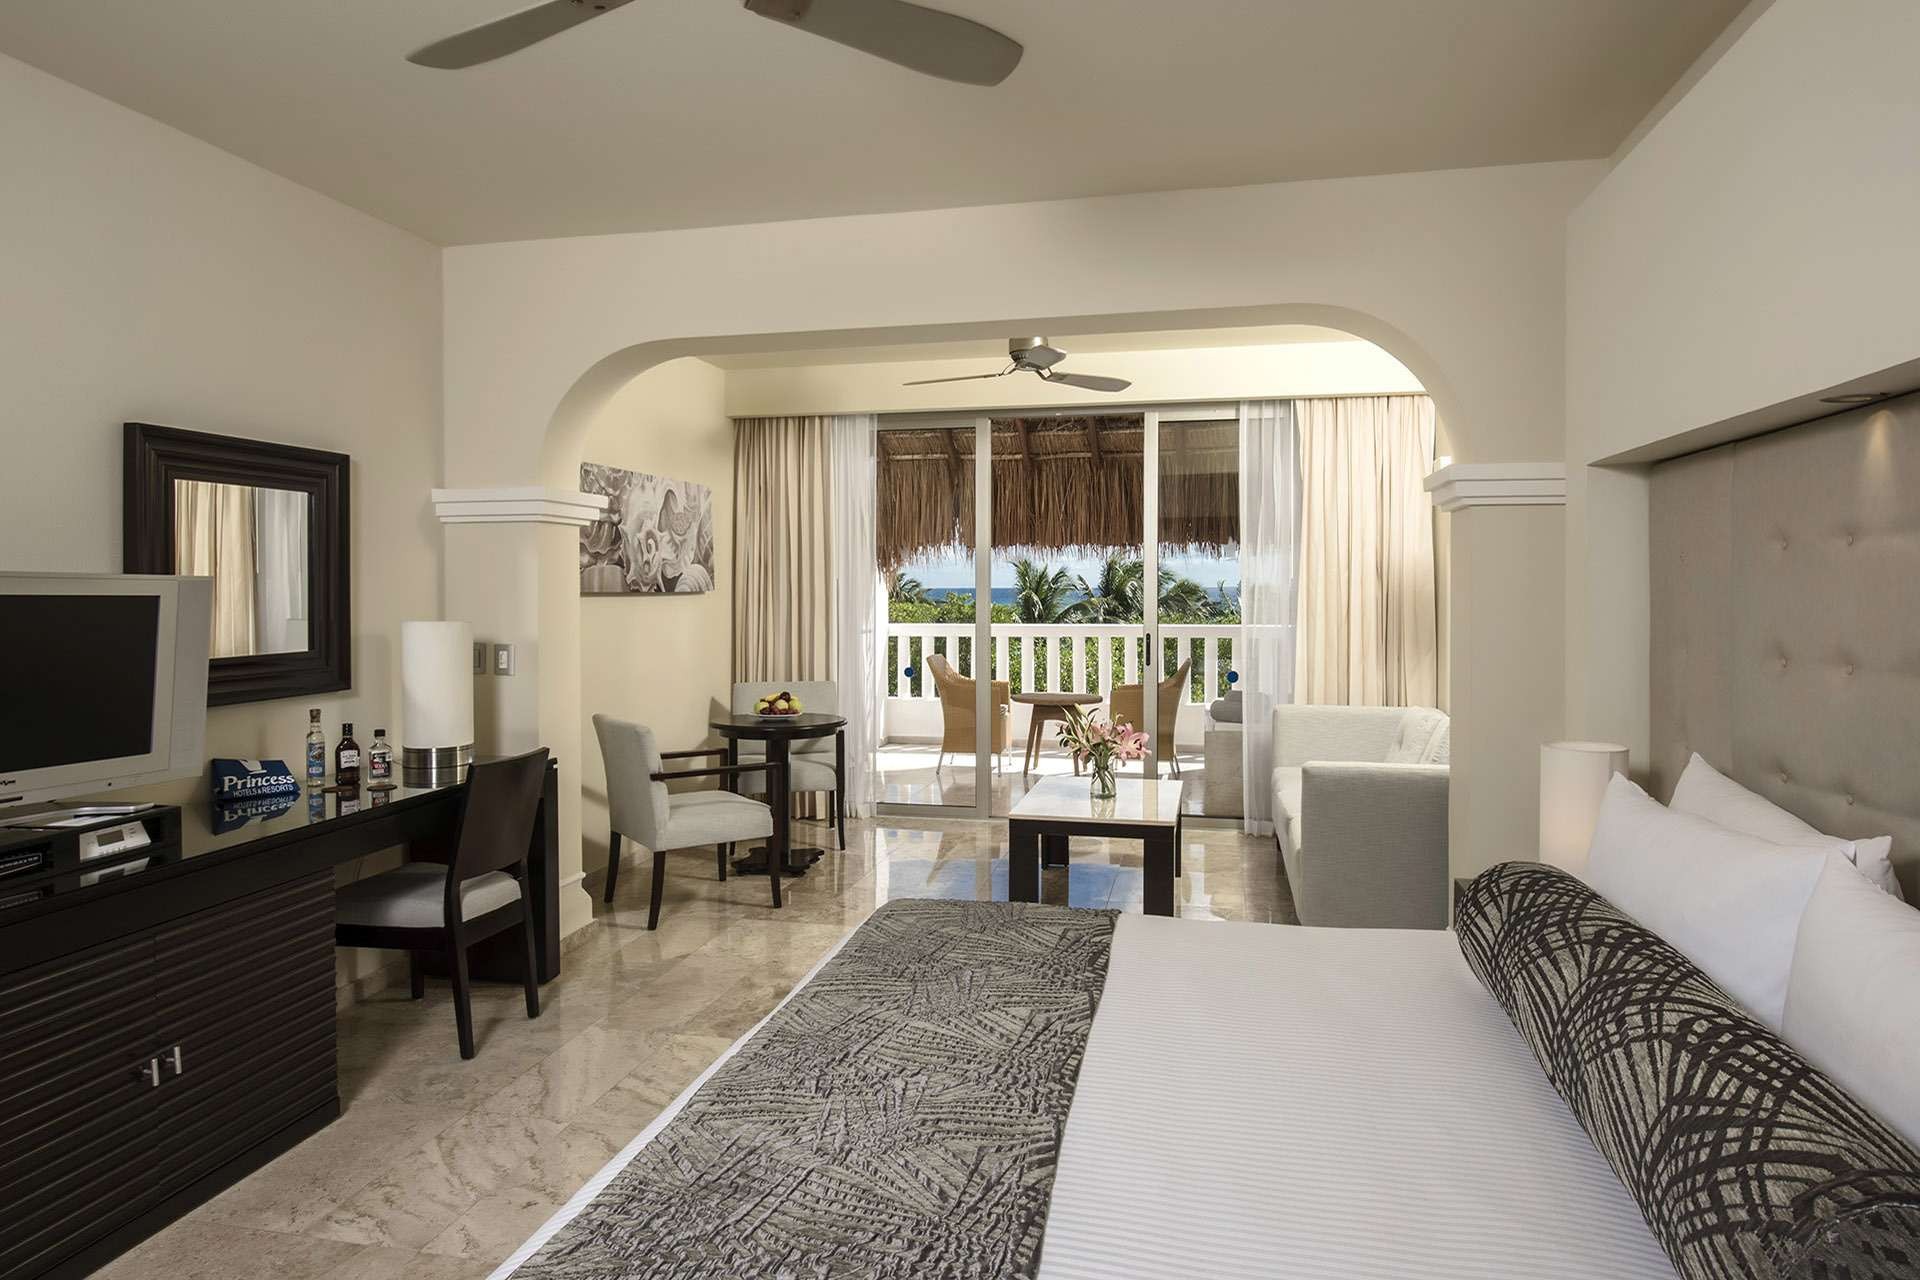 Platinum Suite, Grand Riviera & Grand Sunset Princess Hotel 5*